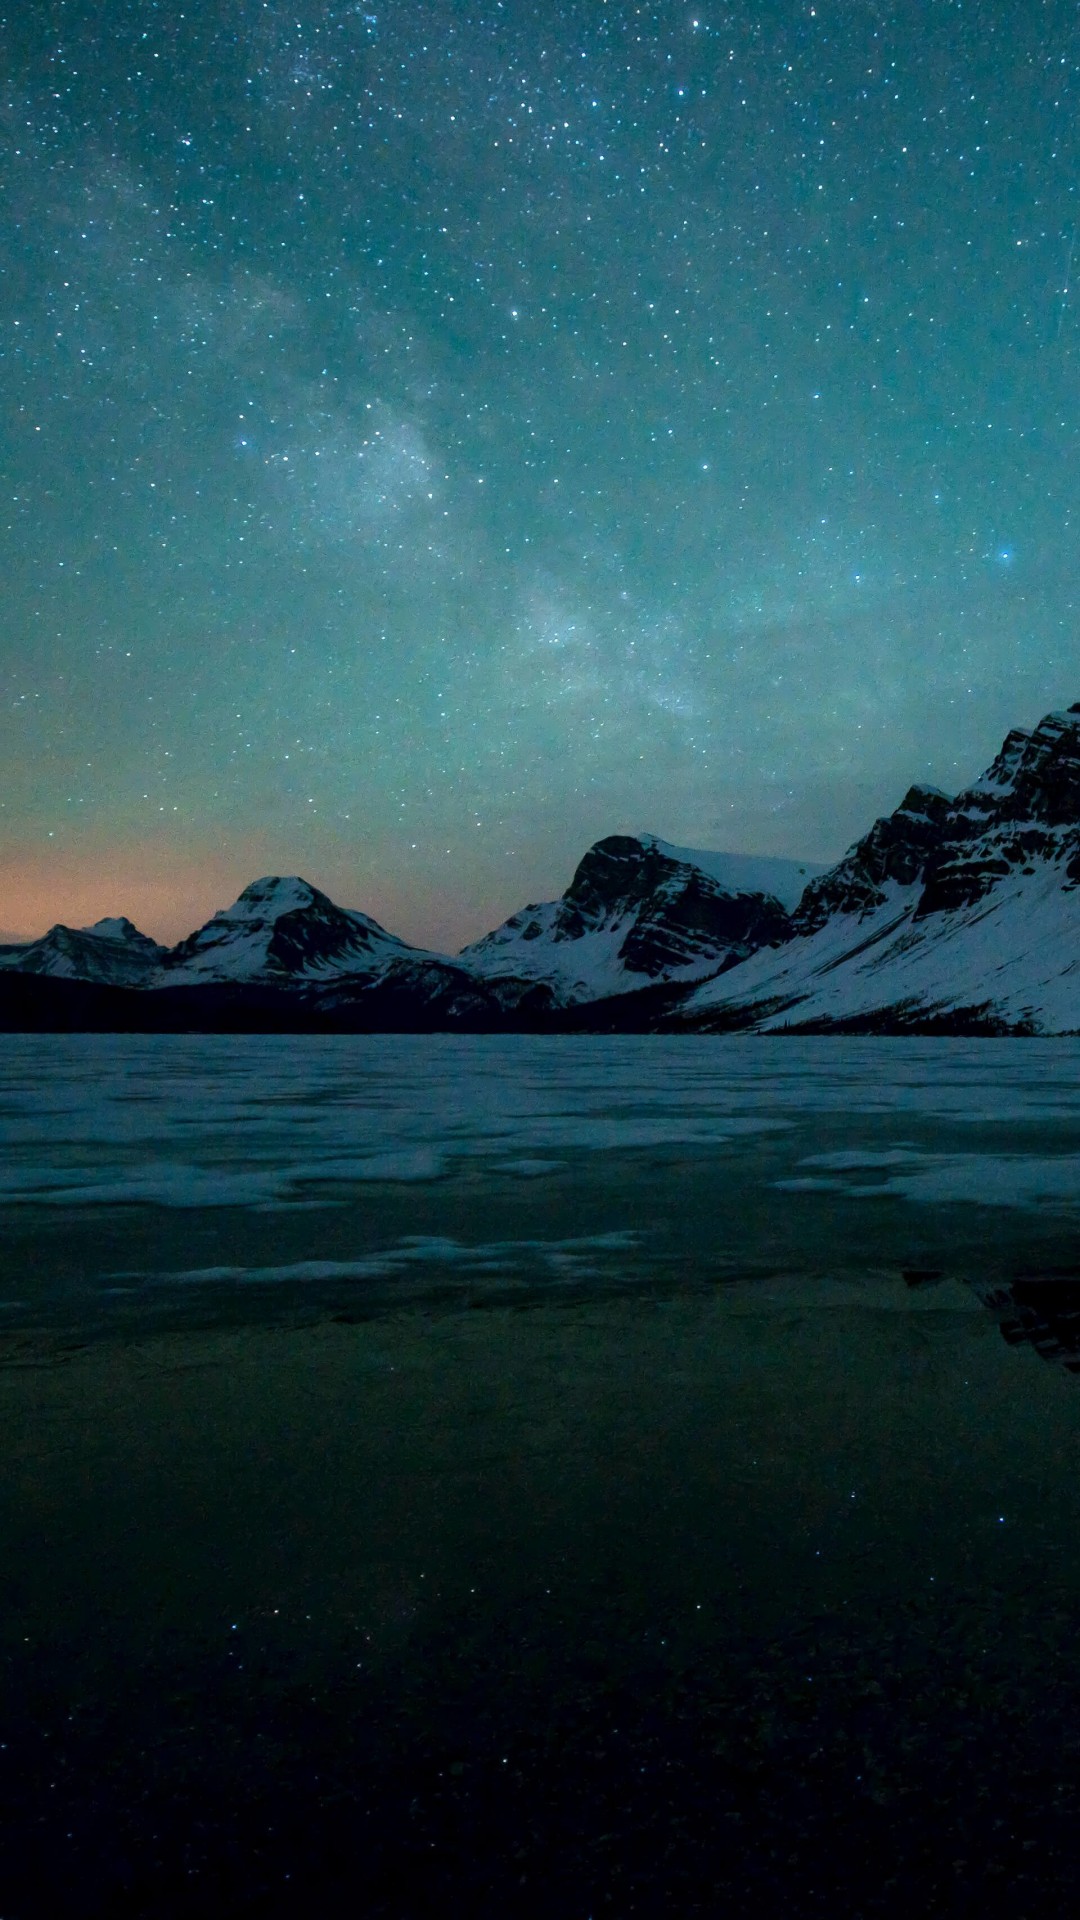 Milky Way over Bow Lake, Alberta, Canada Wallpaper for SAMSUNG Galaxy Note 3